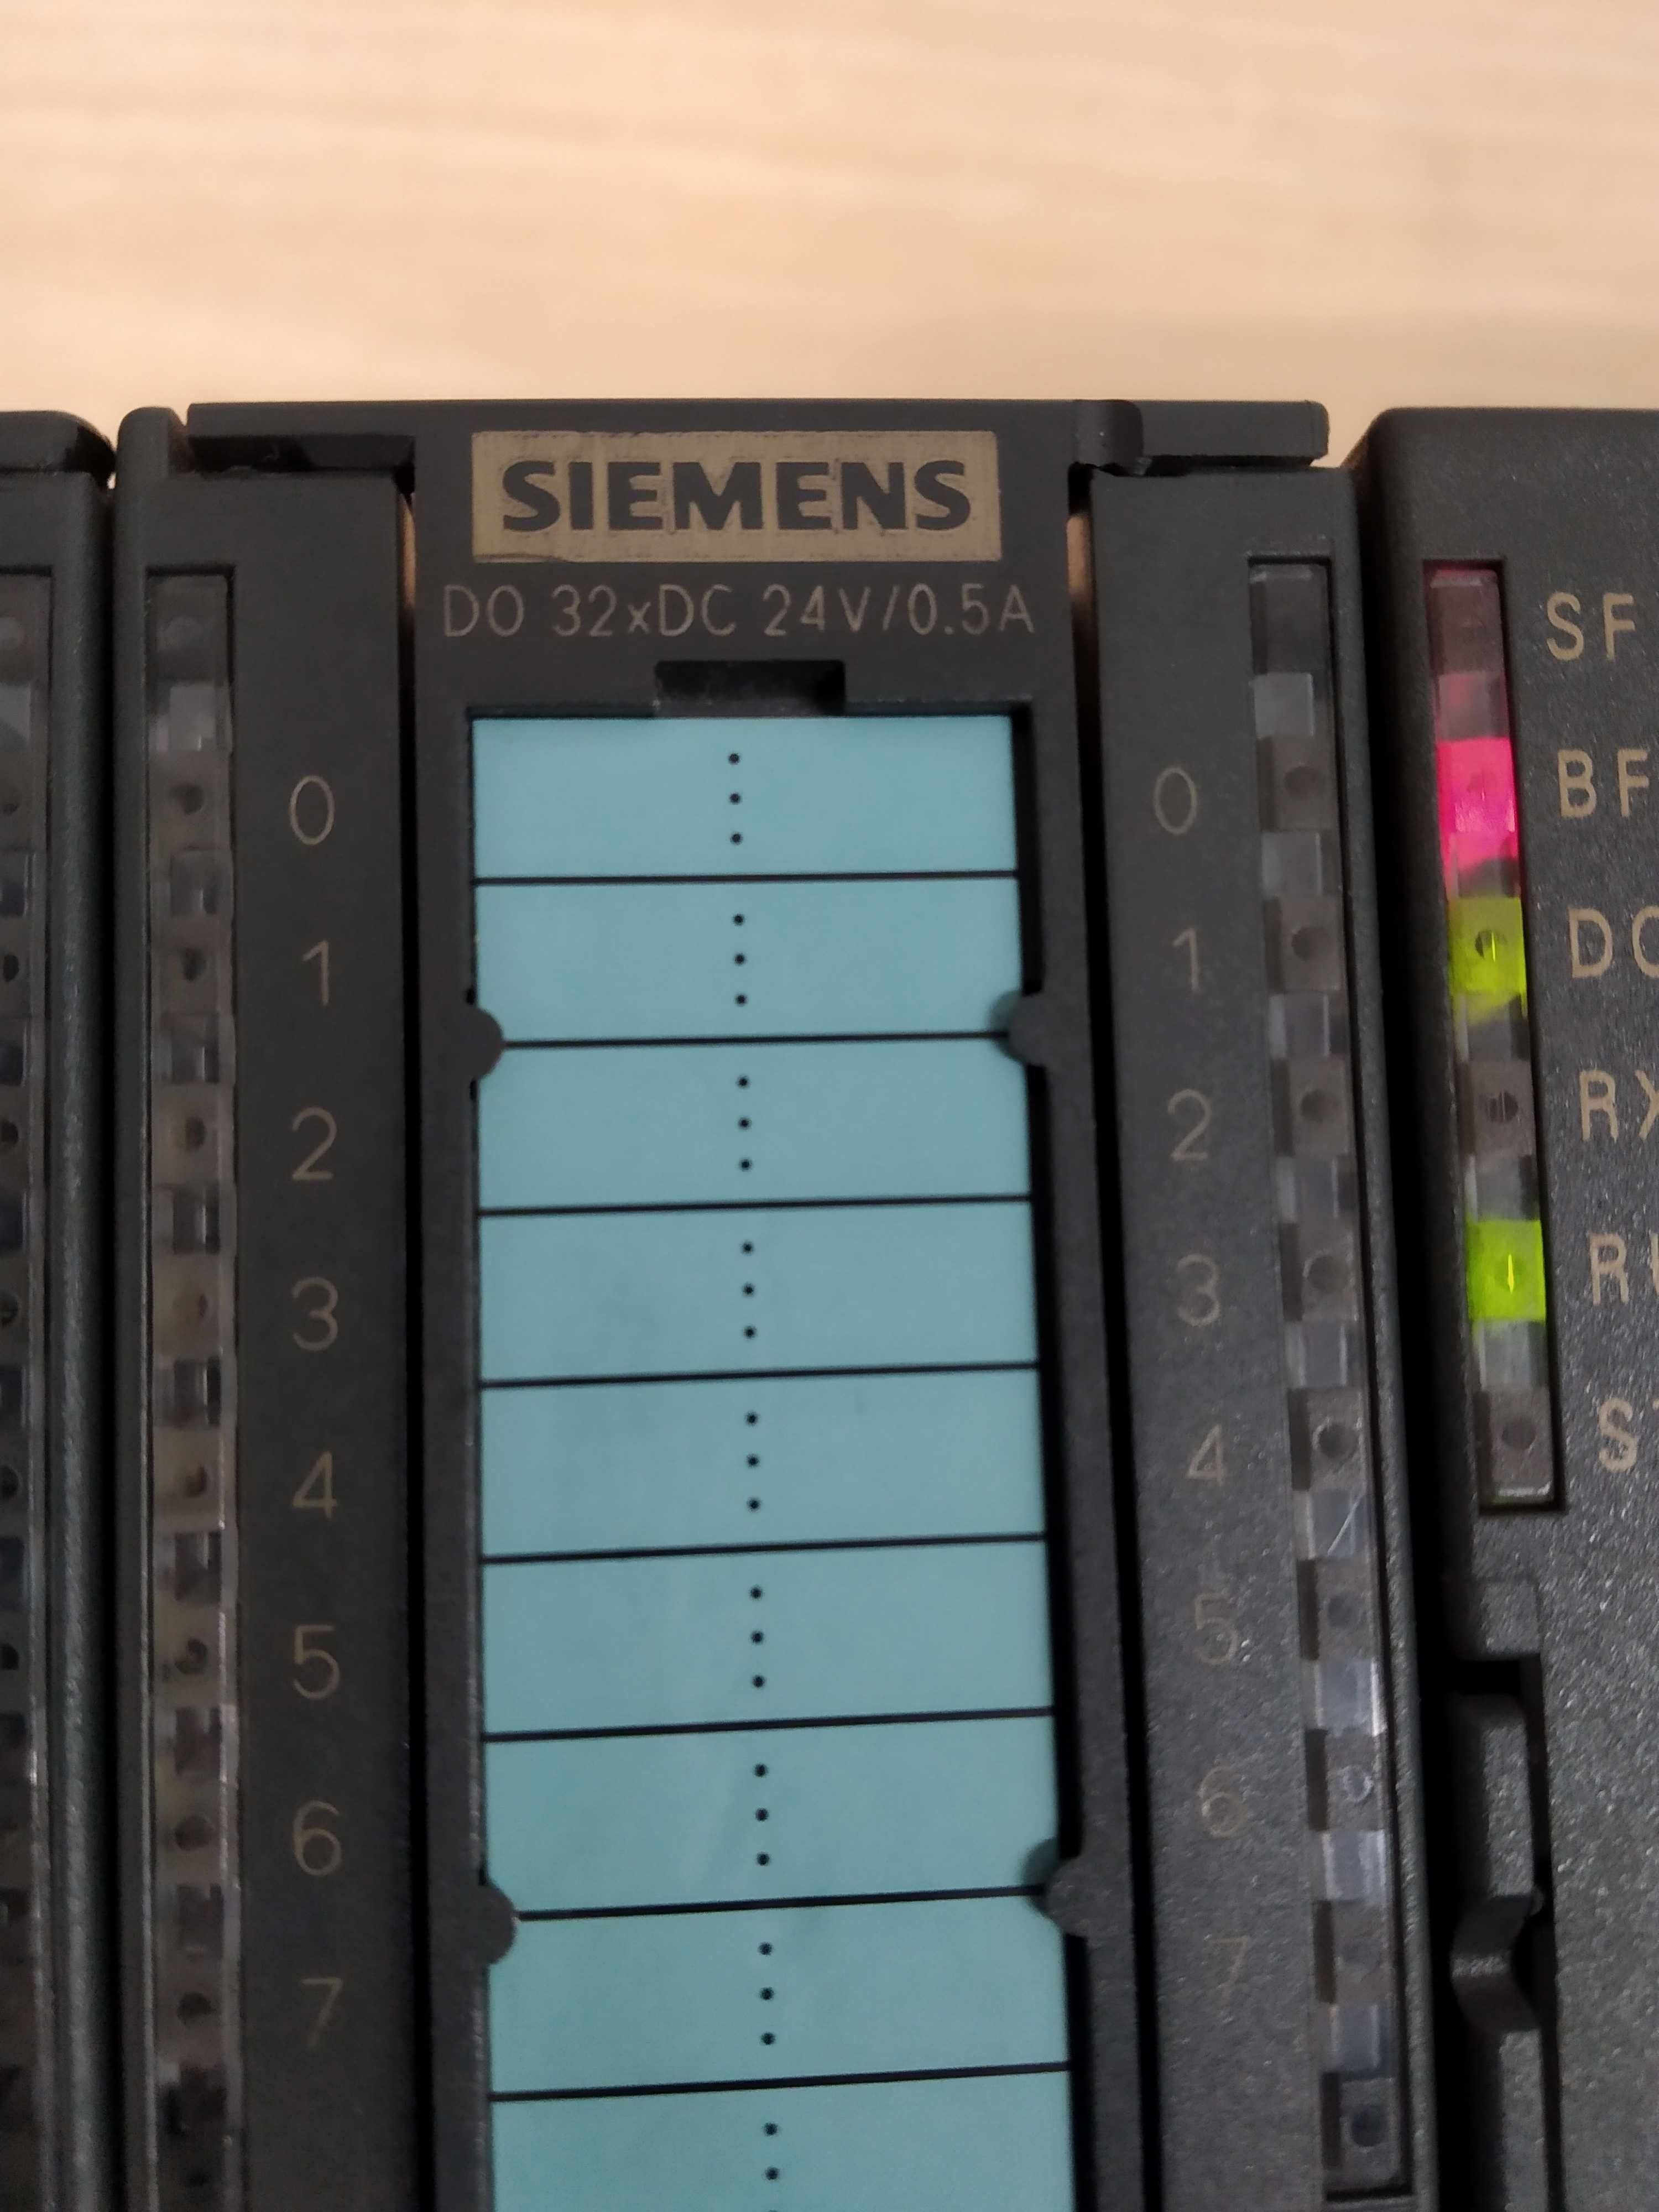 Sterownik Siemens S7 300 CPU315 2PN/DP - cały zestaw.